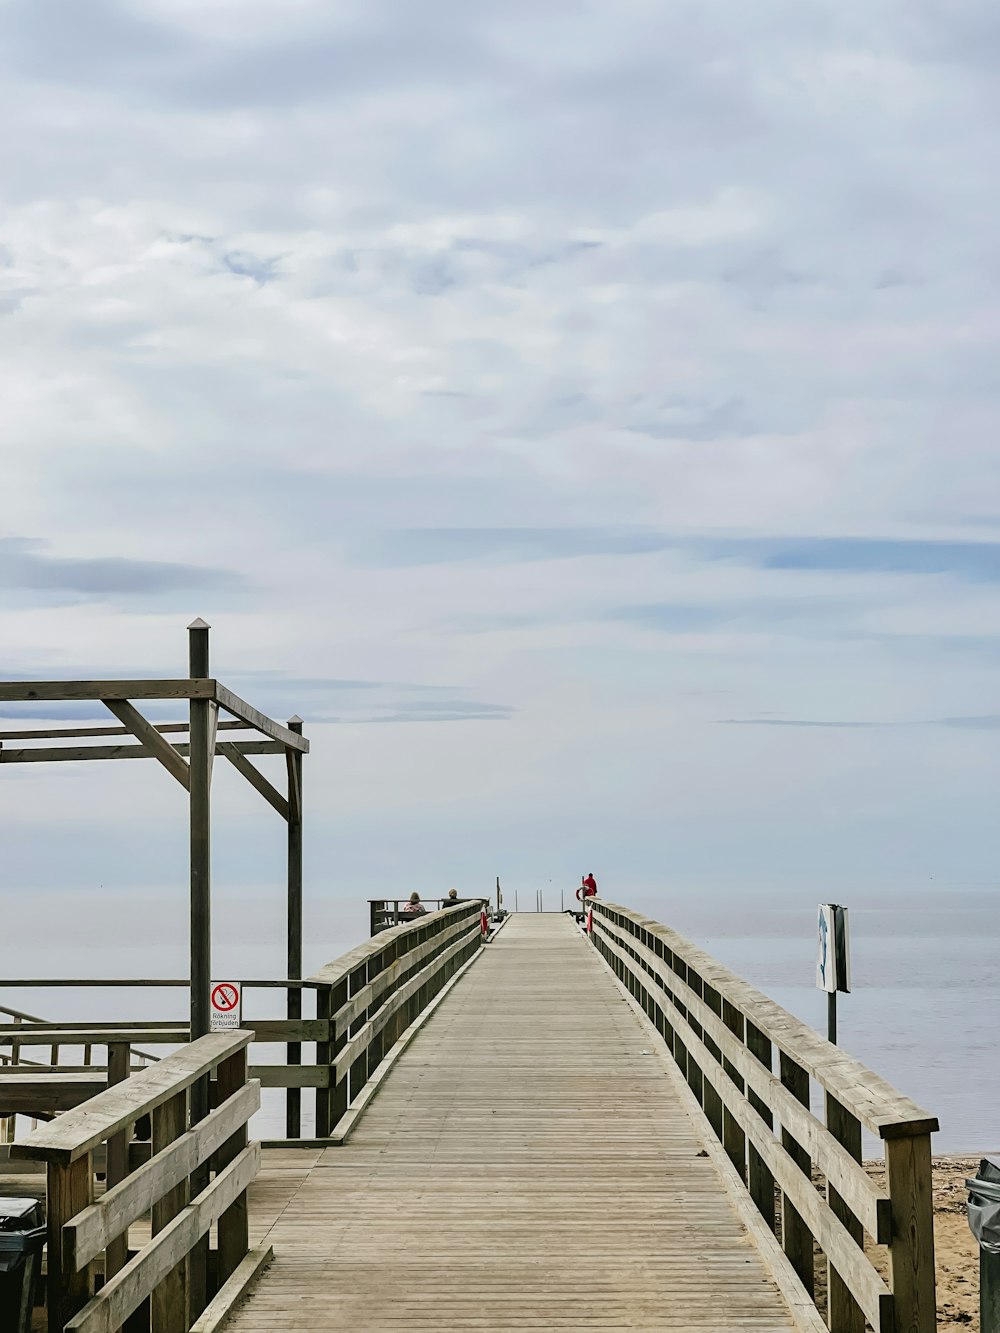 a long wooden pier extending into the ocean